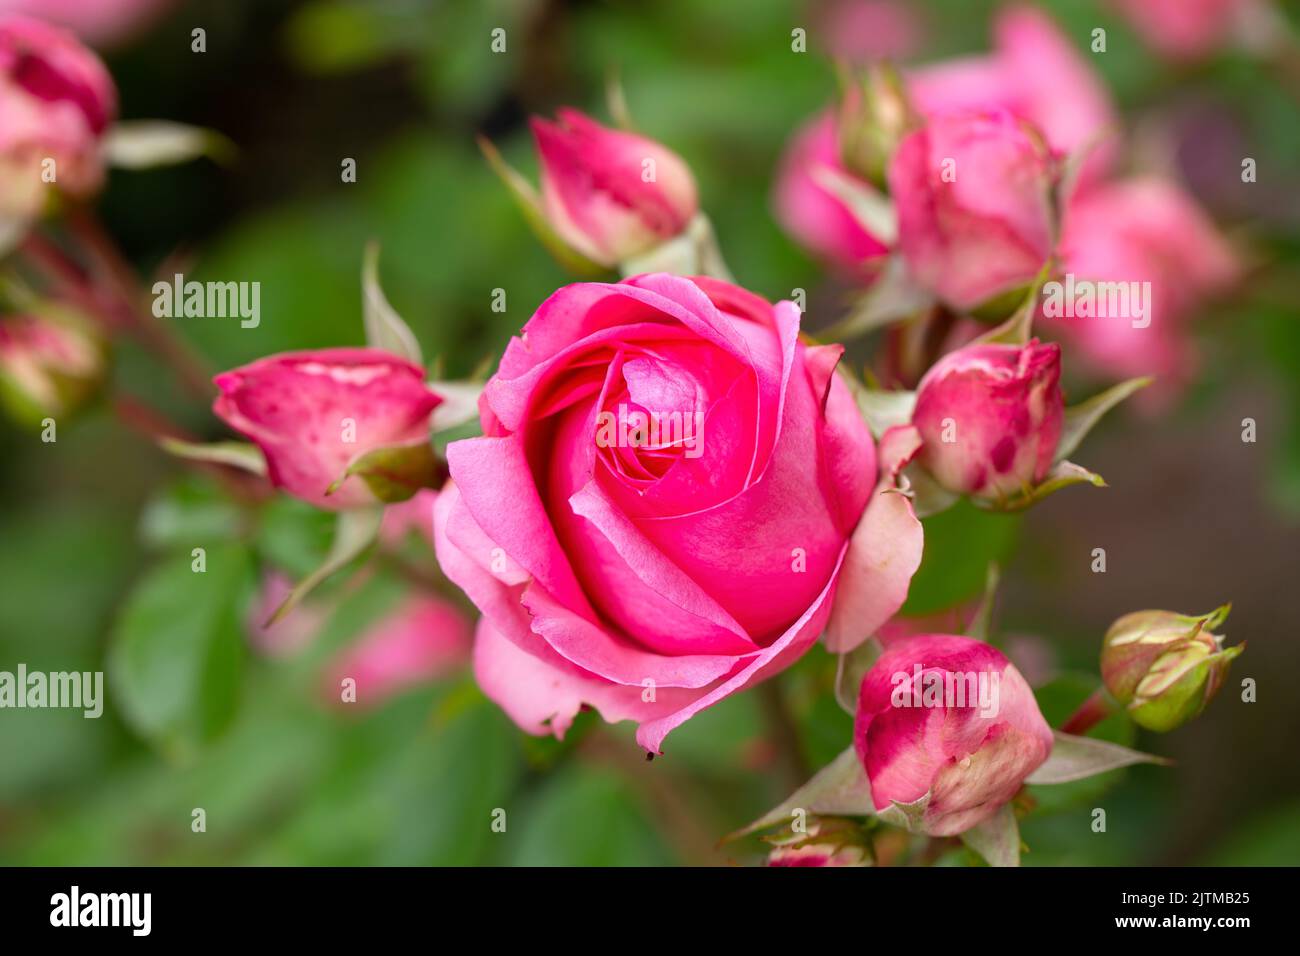 Pink rose flower bloom in the garden Stock Photo